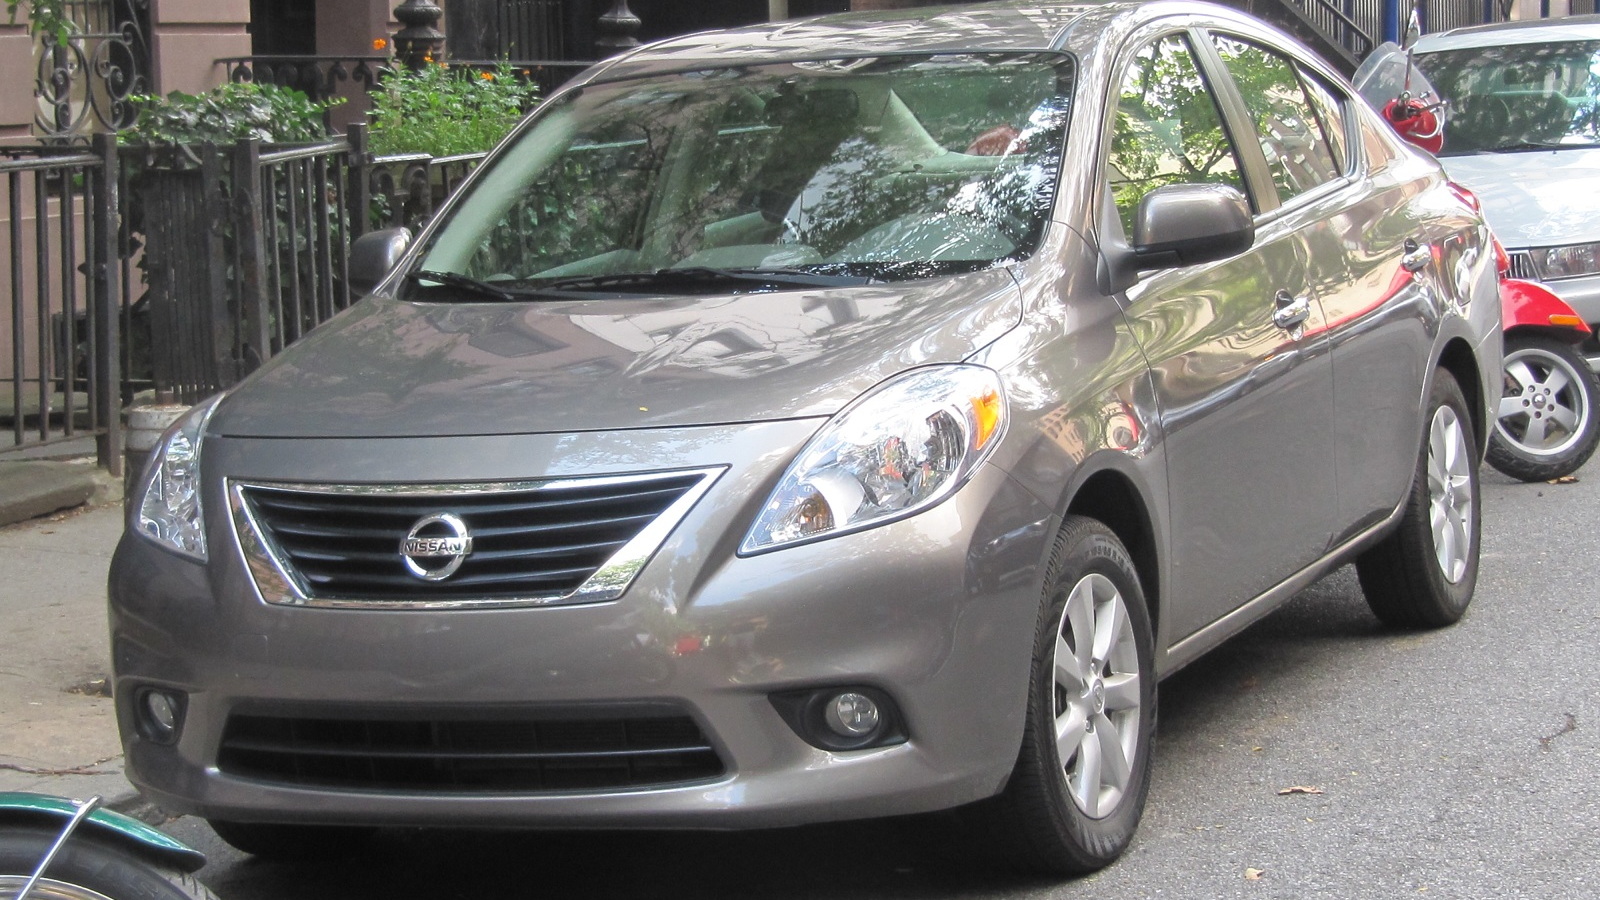 2012 Nissan Versa 1.6 SL, New York City, July 2012